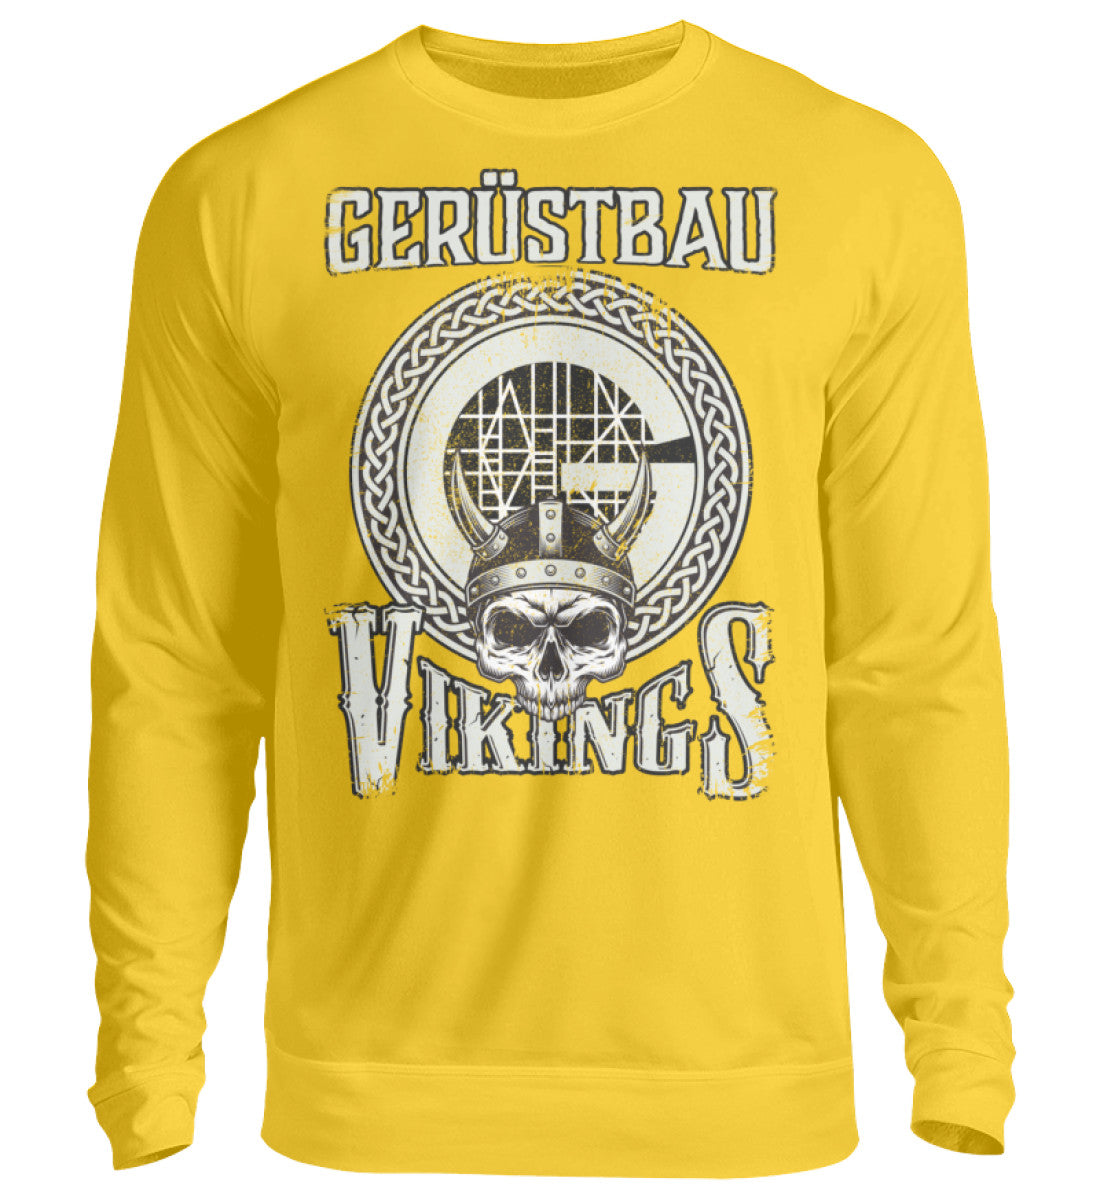 Gerüstbau Vikings - Pullover €32.95 Gerüstbauer - Shop >>